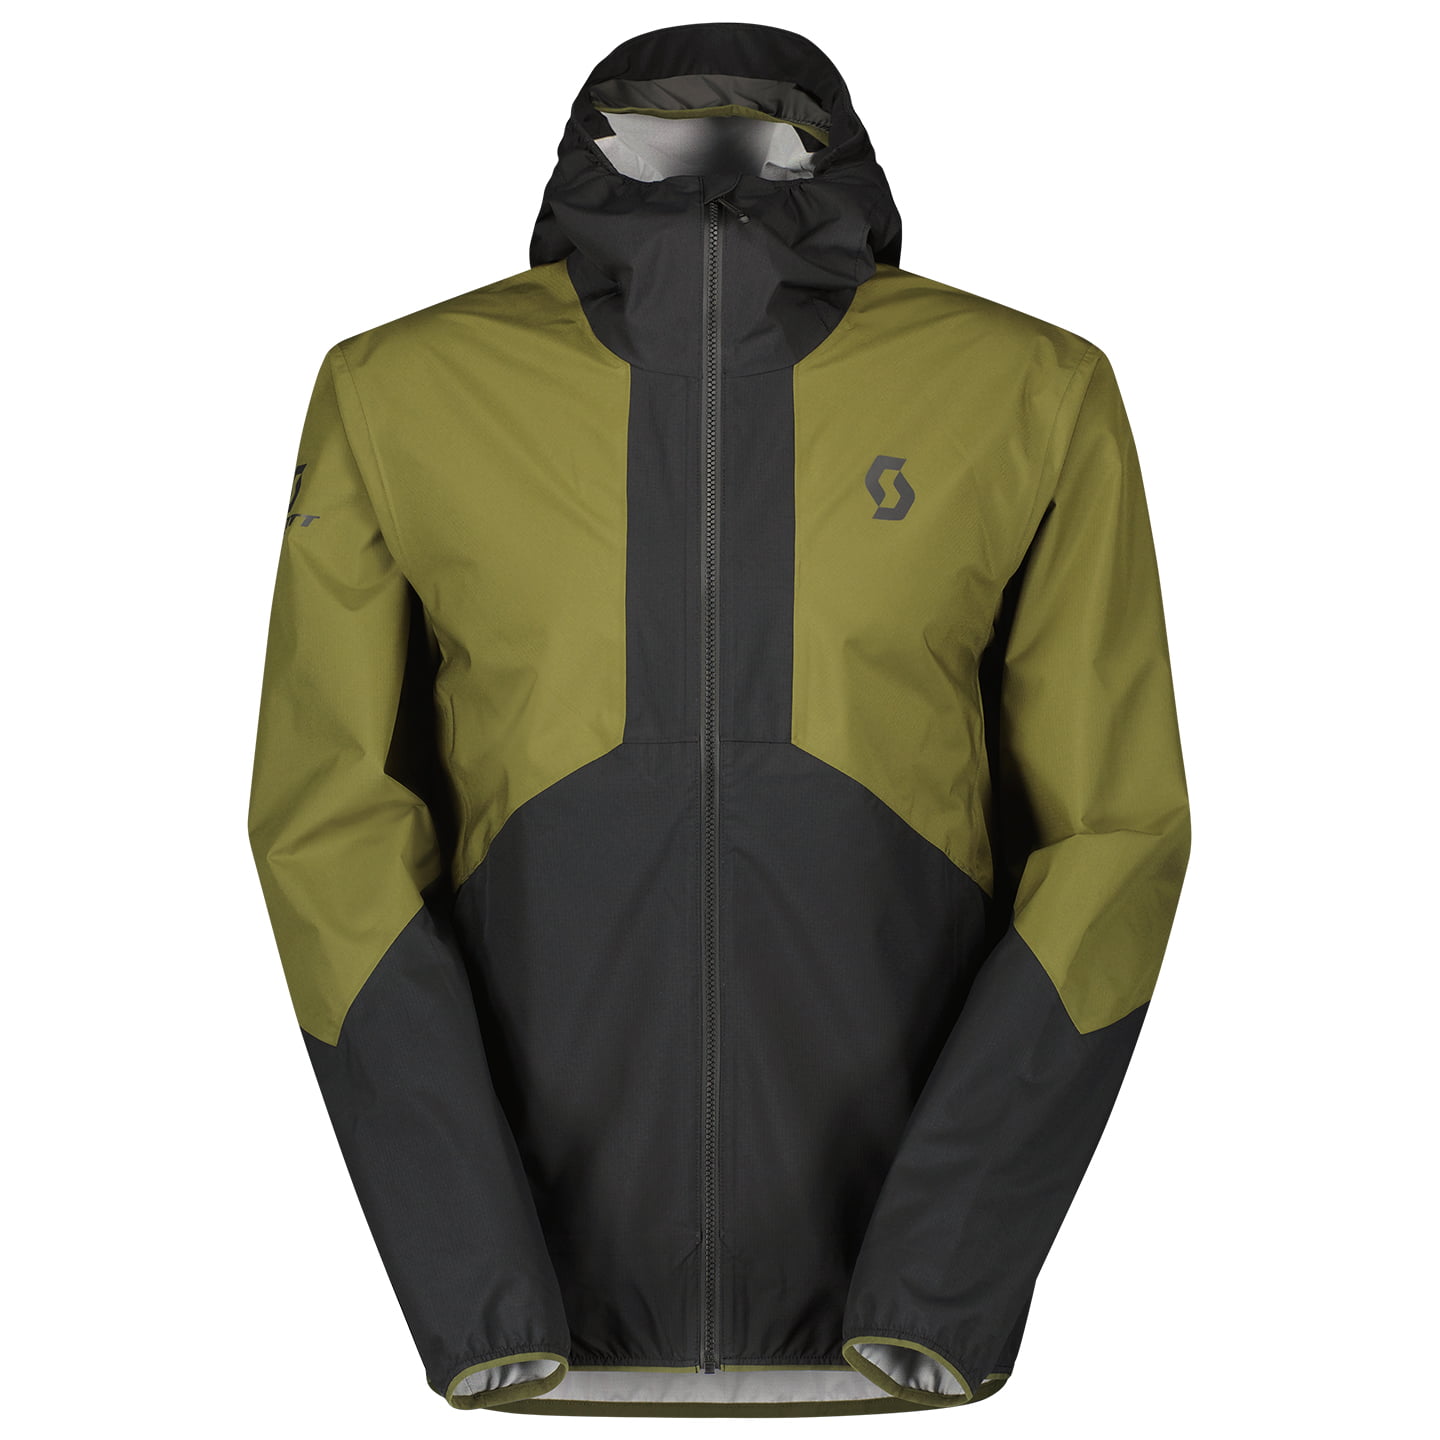 SCOTT Rain Jacket Explorair Light Dryo Waterproof Jacket, for men, size L, Cycle jacket, Rainwear